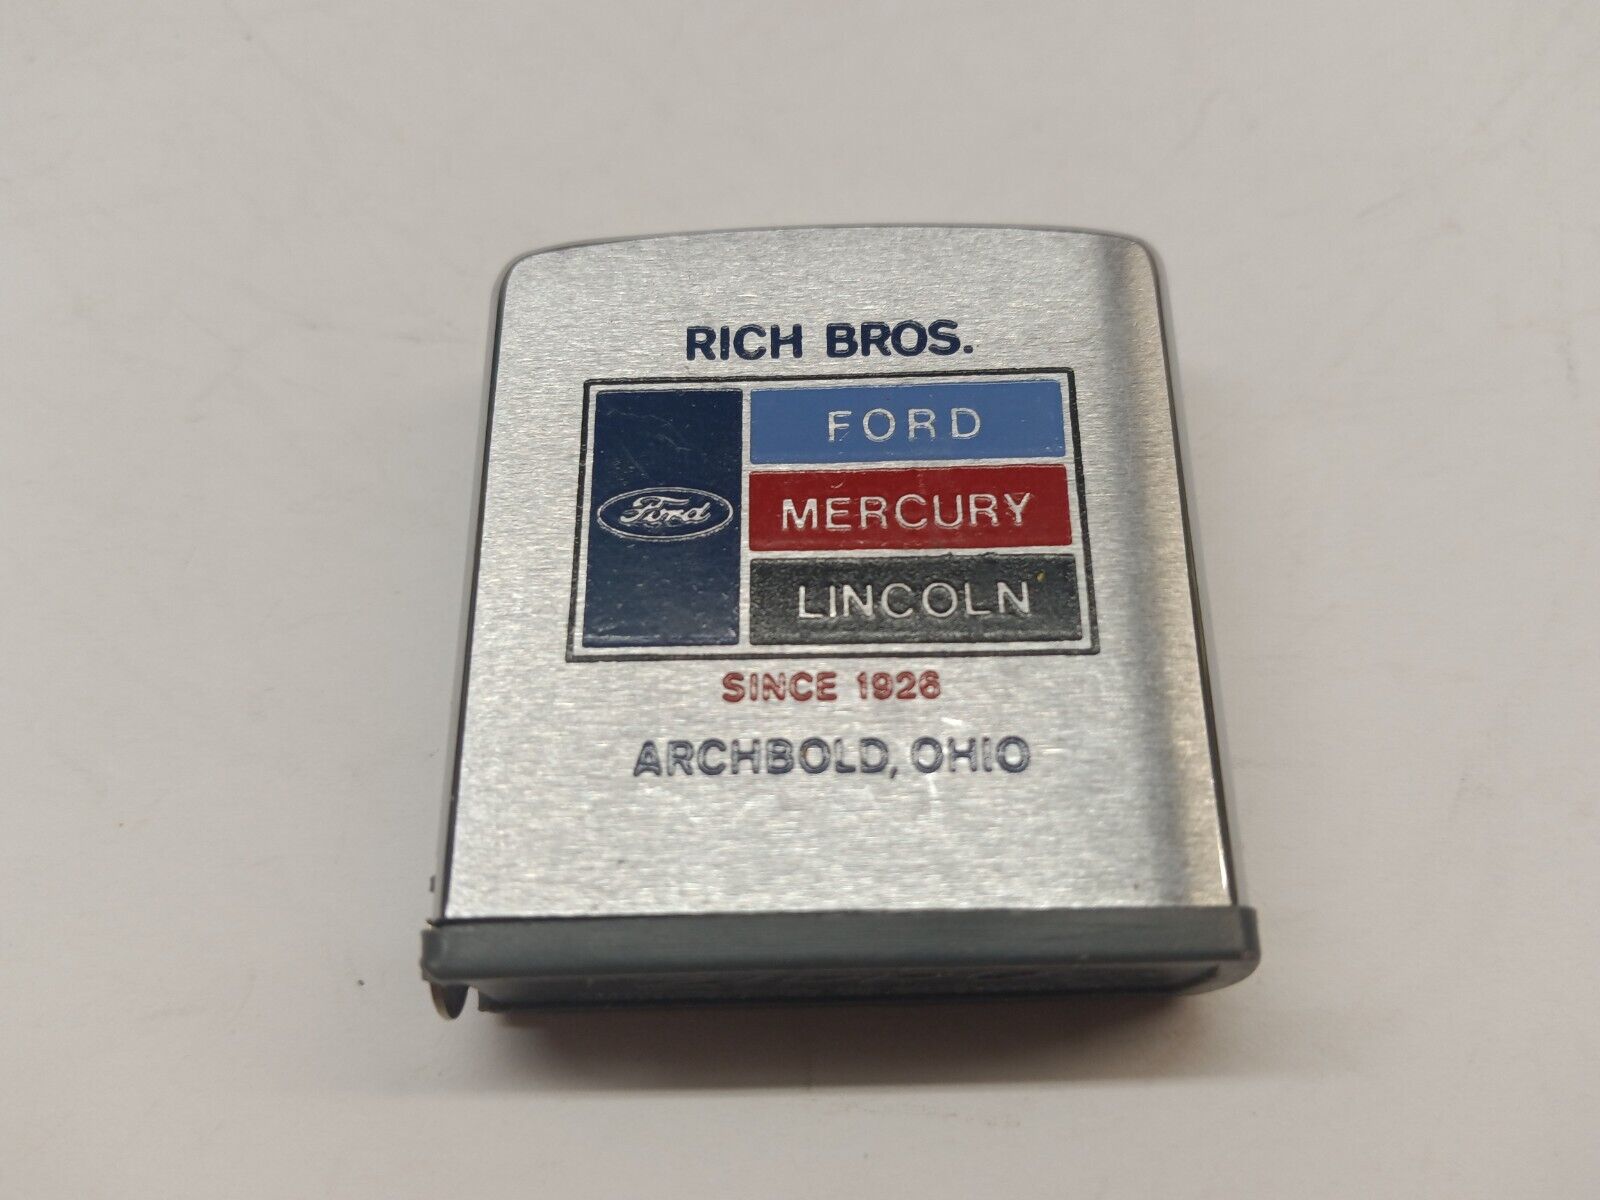 Vintage 1960s Ford Dealership Advertising Tape Measure Archbold Ohio